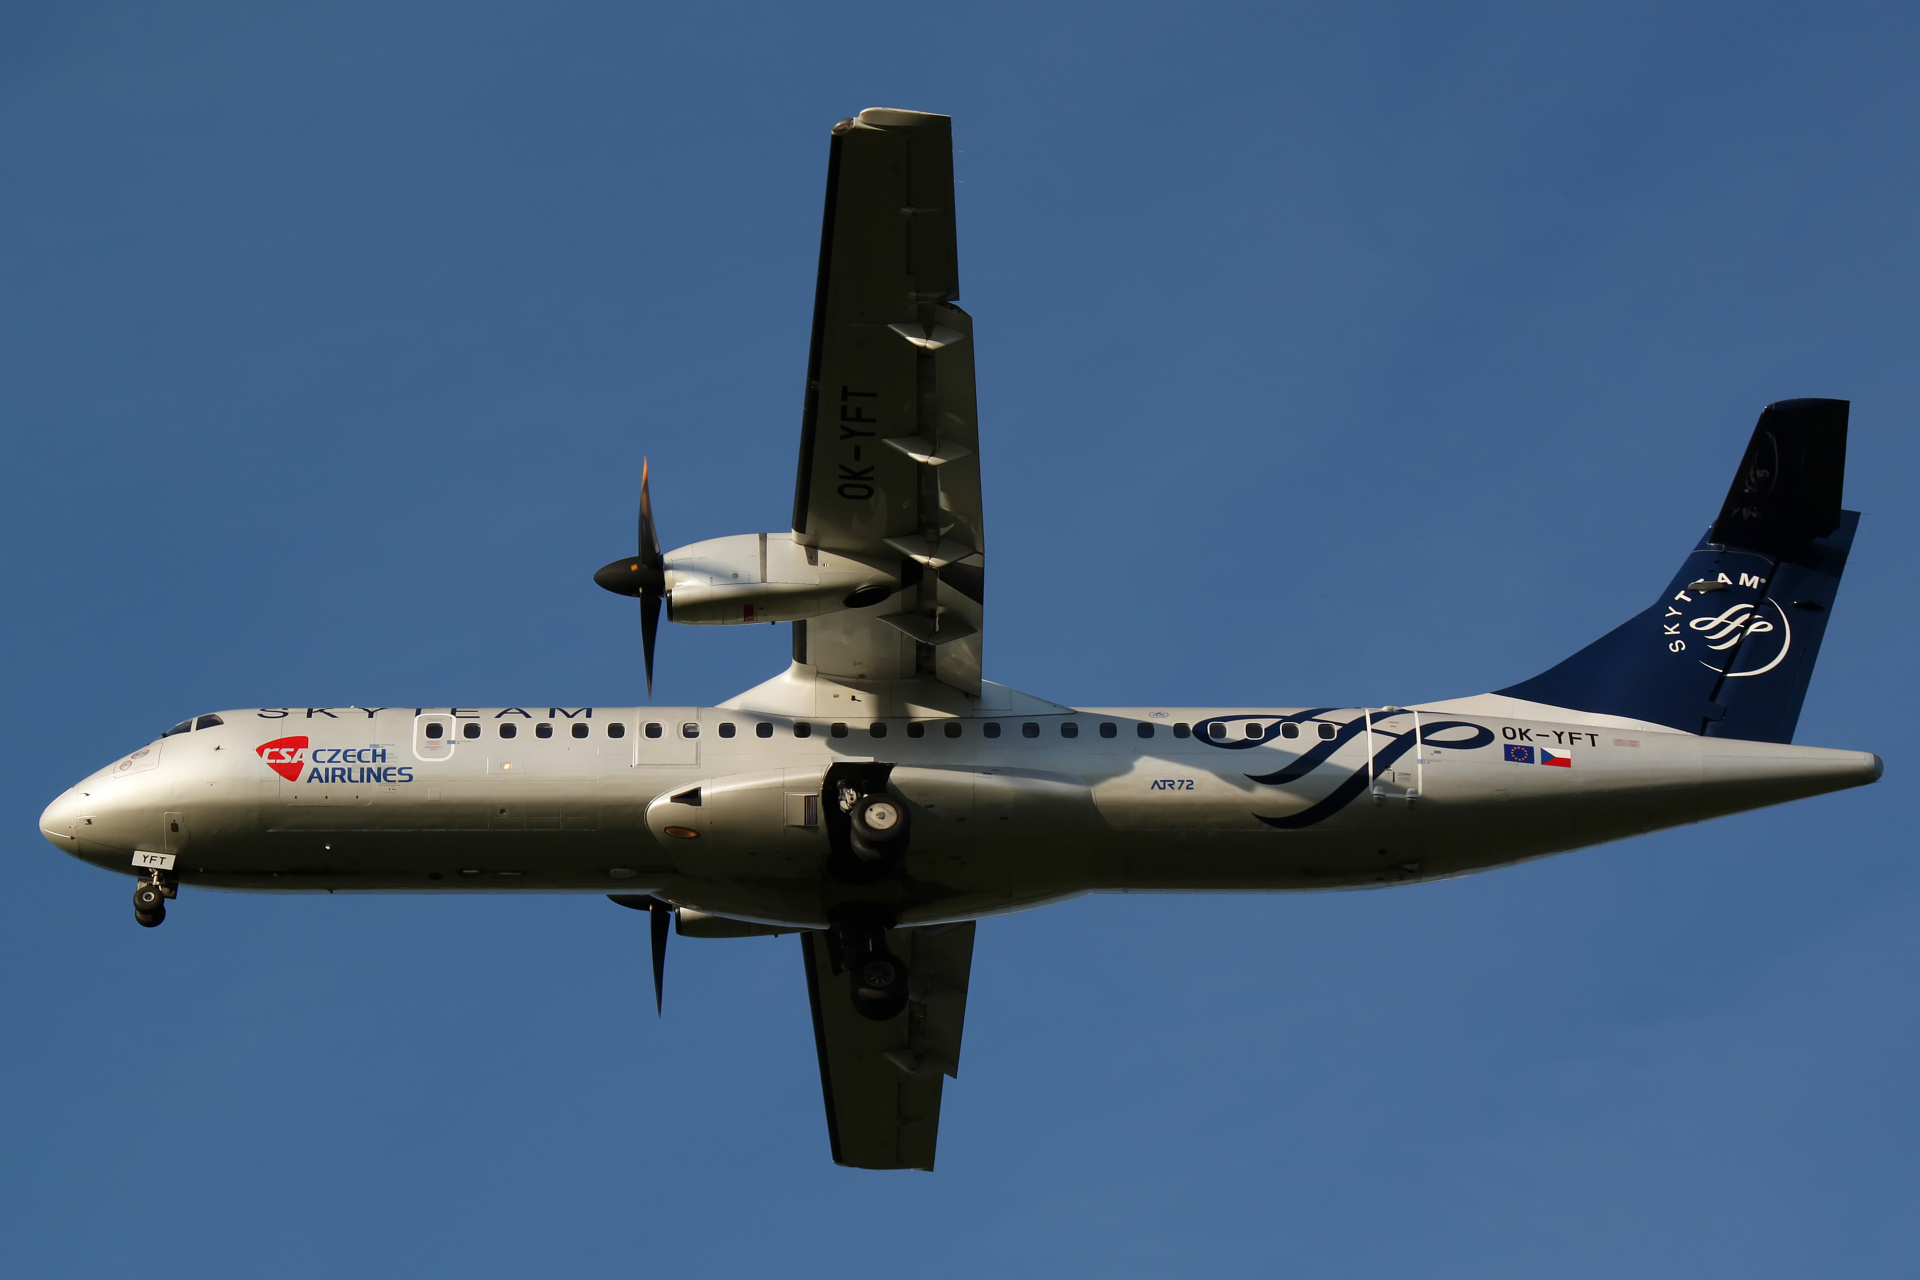 OK-YFT (SkyTeam livery) (Aircraft » EPWA Spotting » ATR 72 » CSA Czech Airlines)